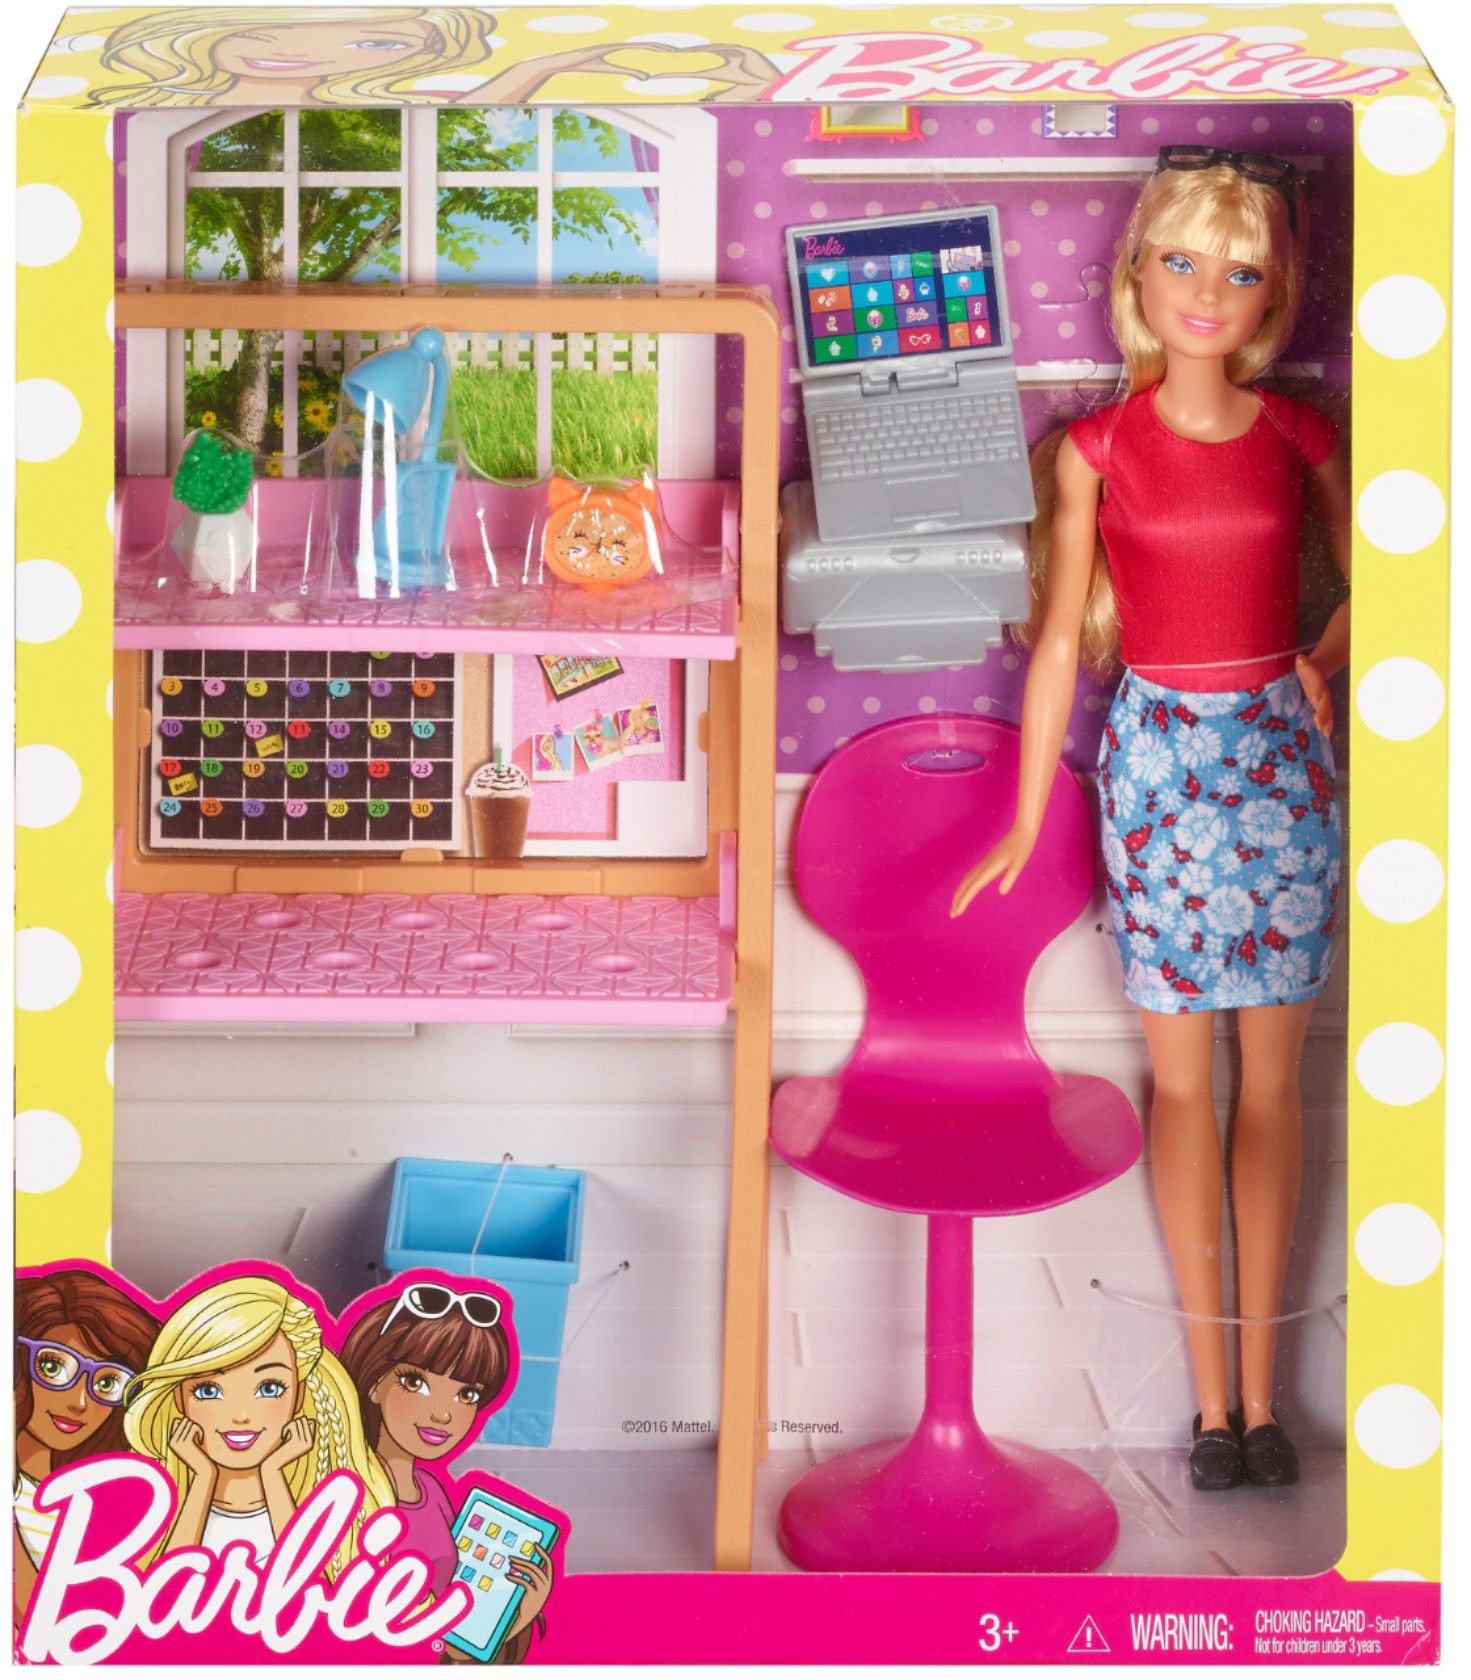 barbie set in